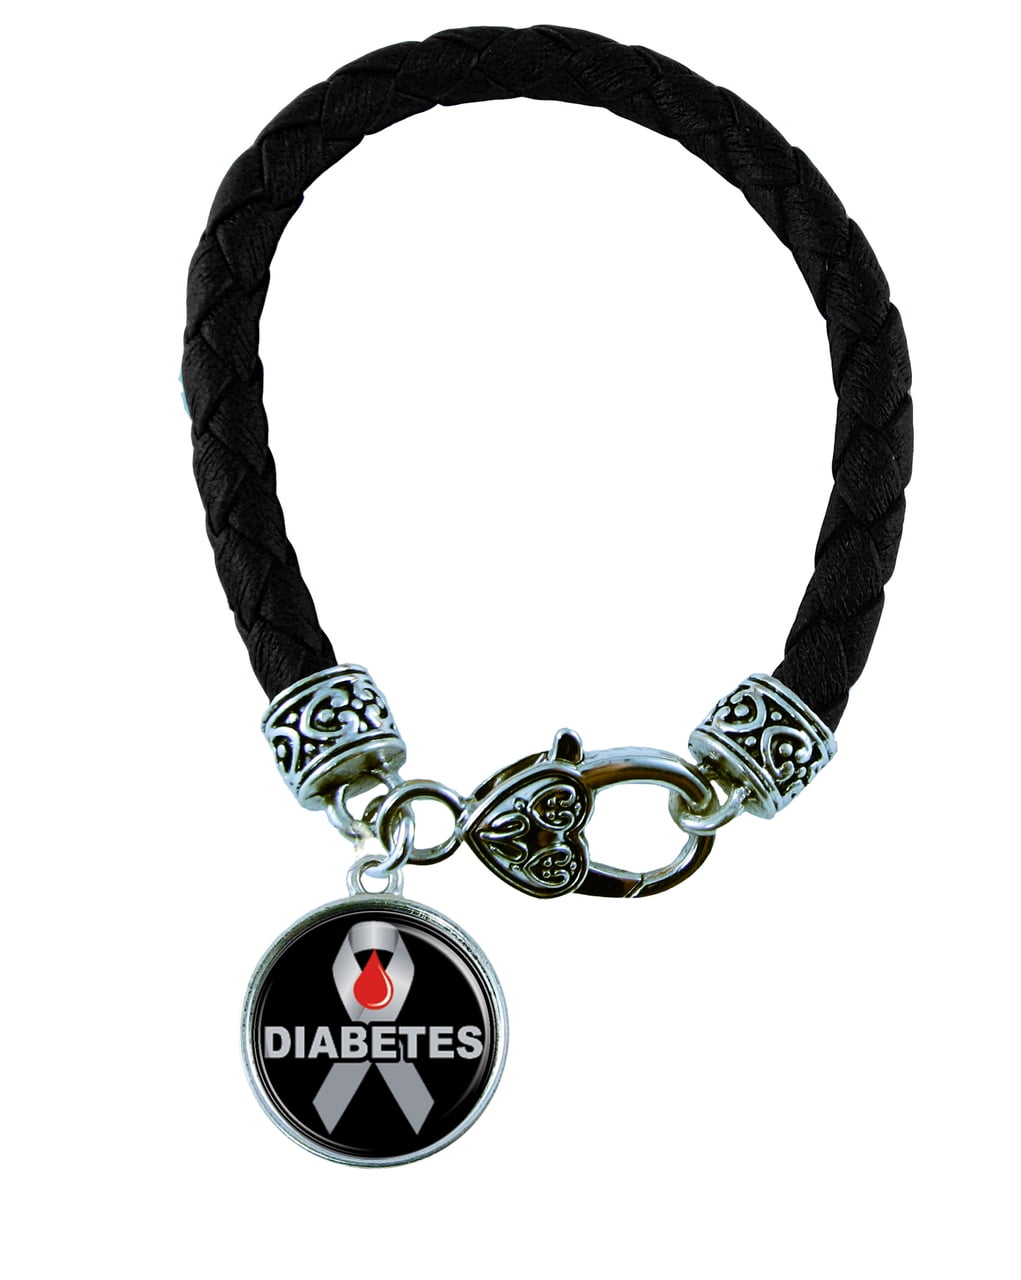 201206090912563581  Diabetes awareness bracelet  Flickr